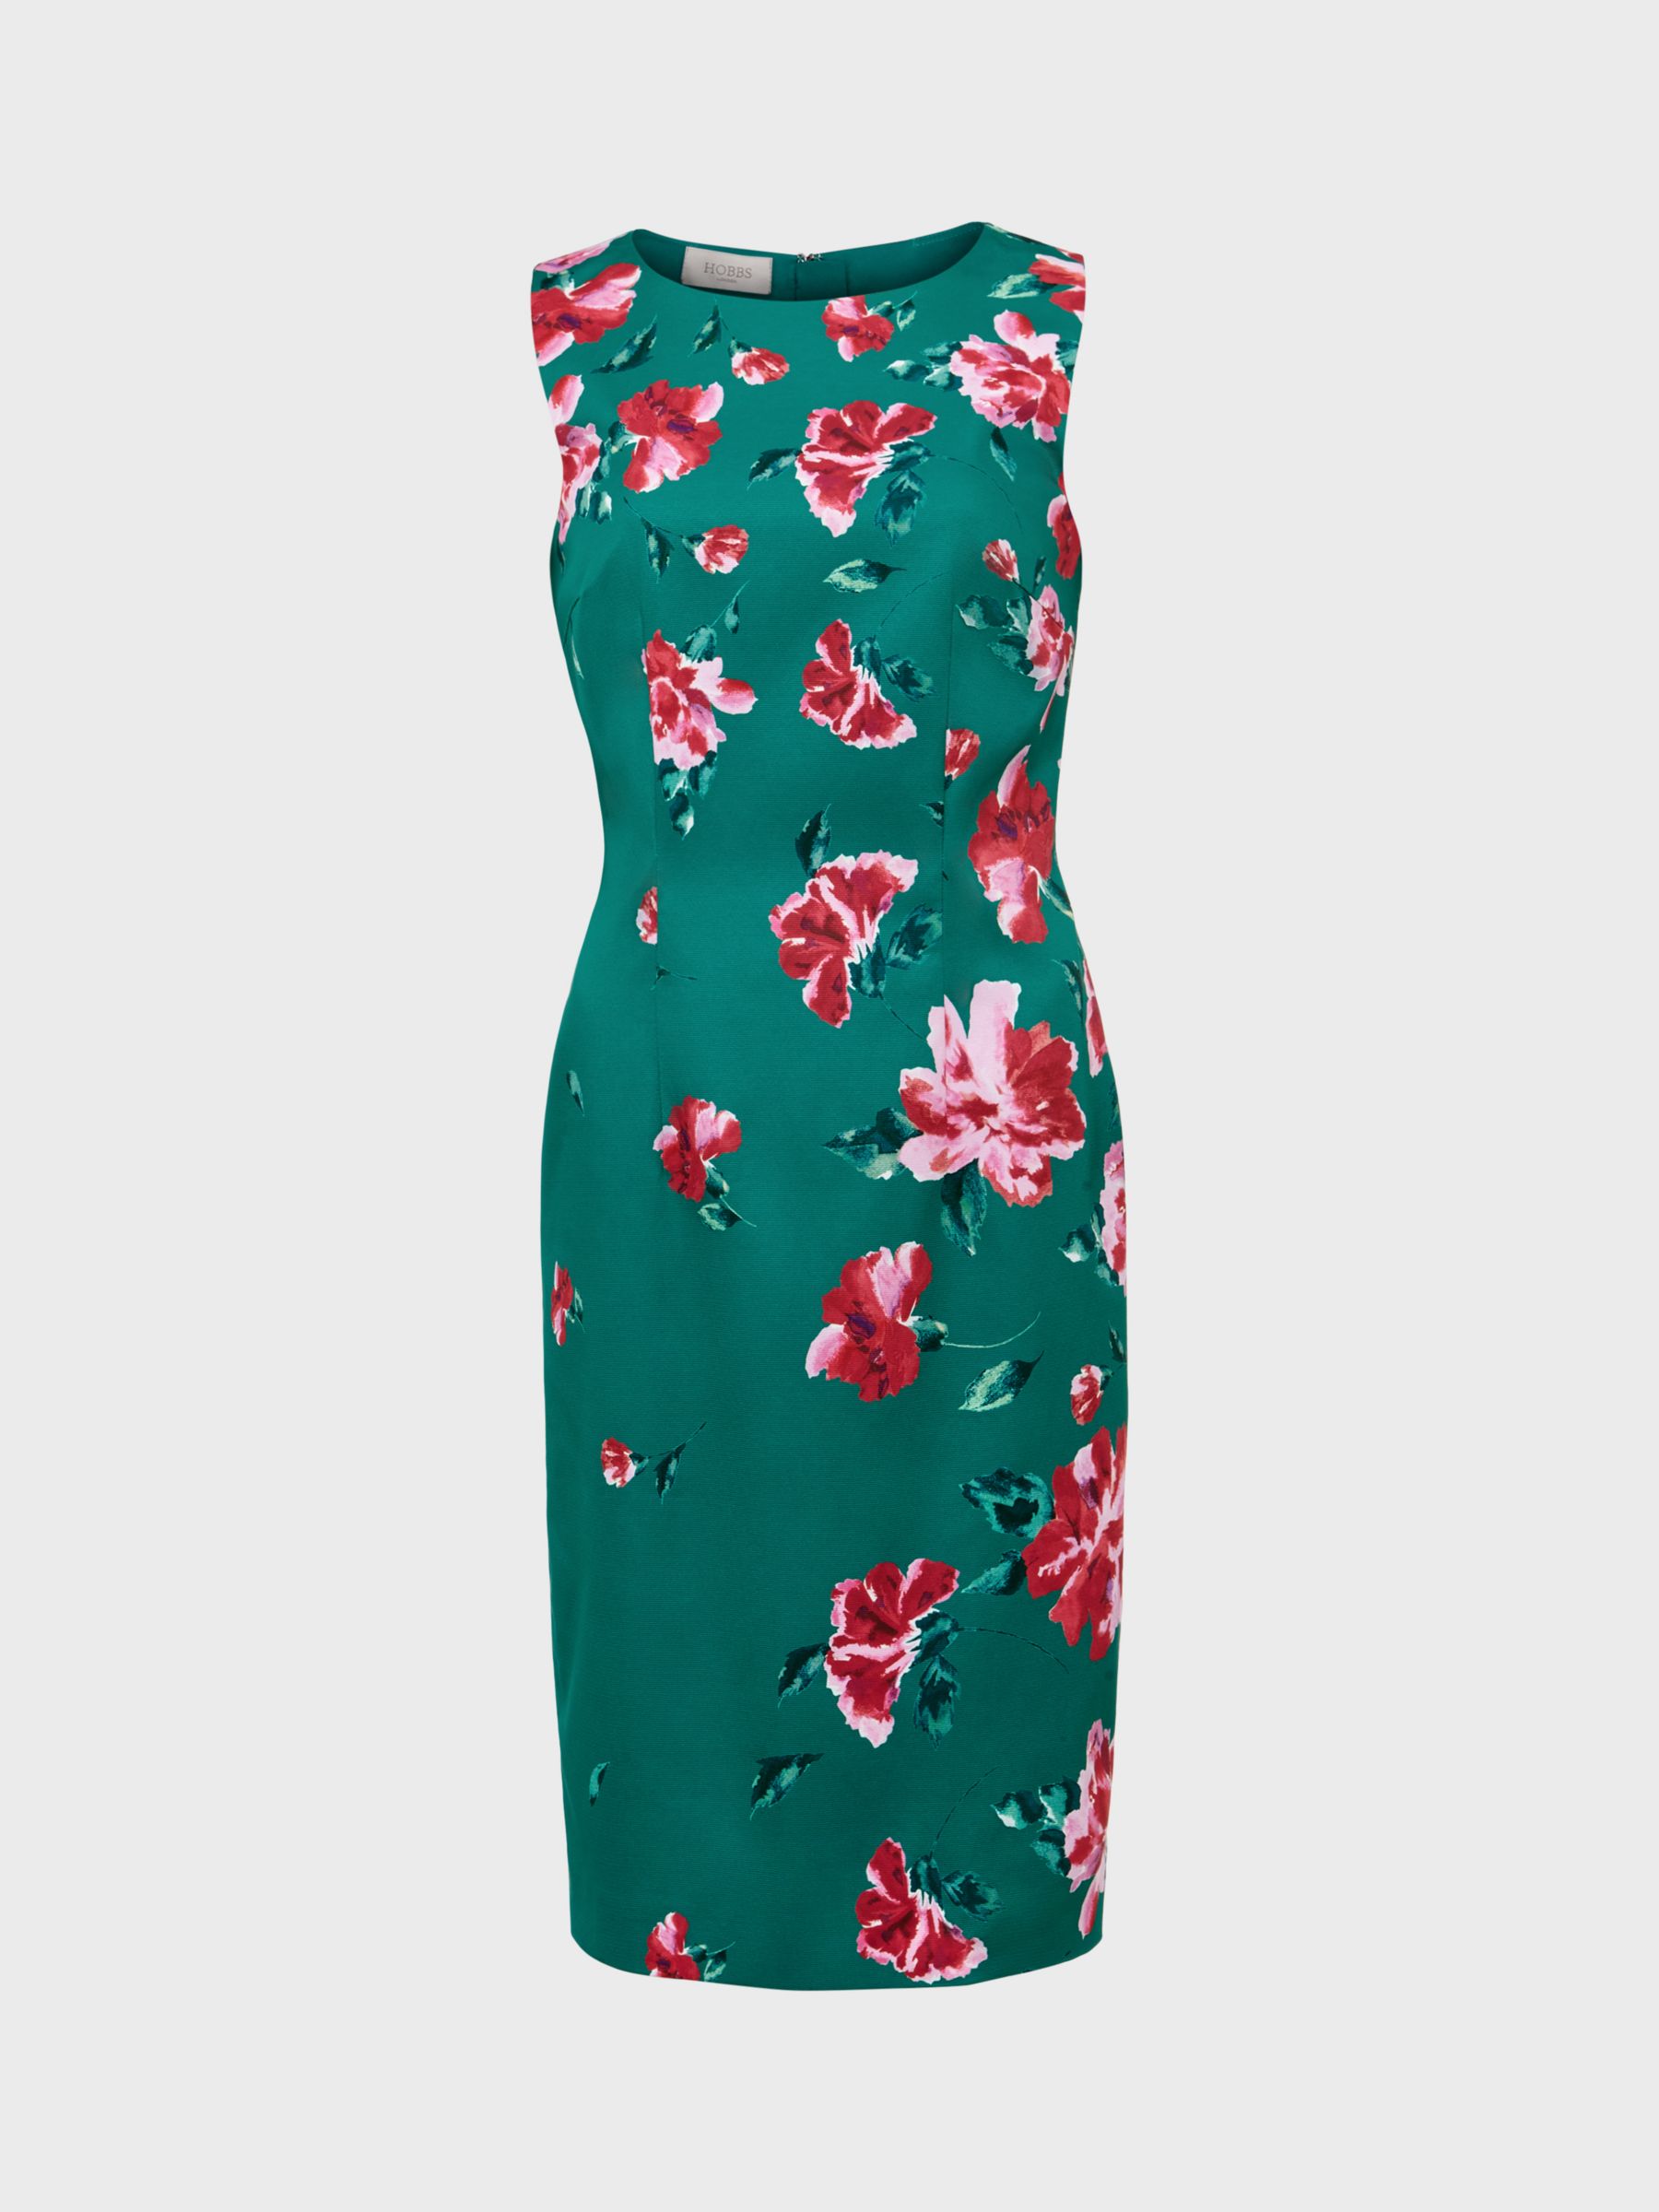 Hobbs Moira Floral Print Pencil Dress, Green/Multi, 6